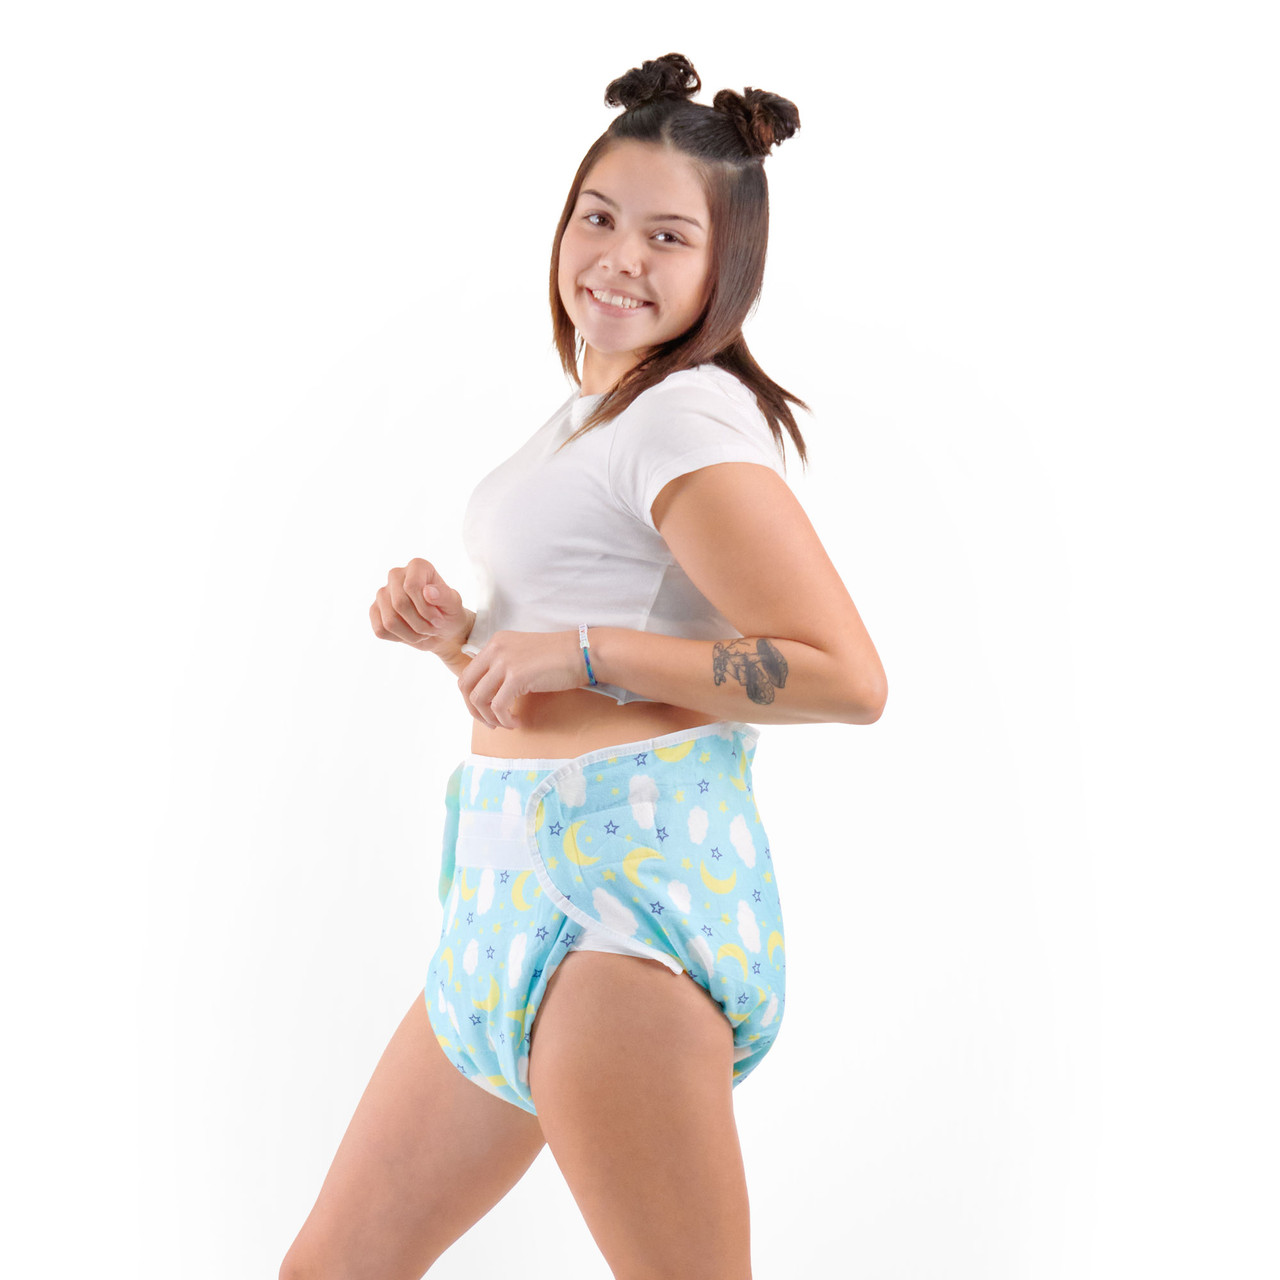 cory hauser add woman wearing cloth diaper photo